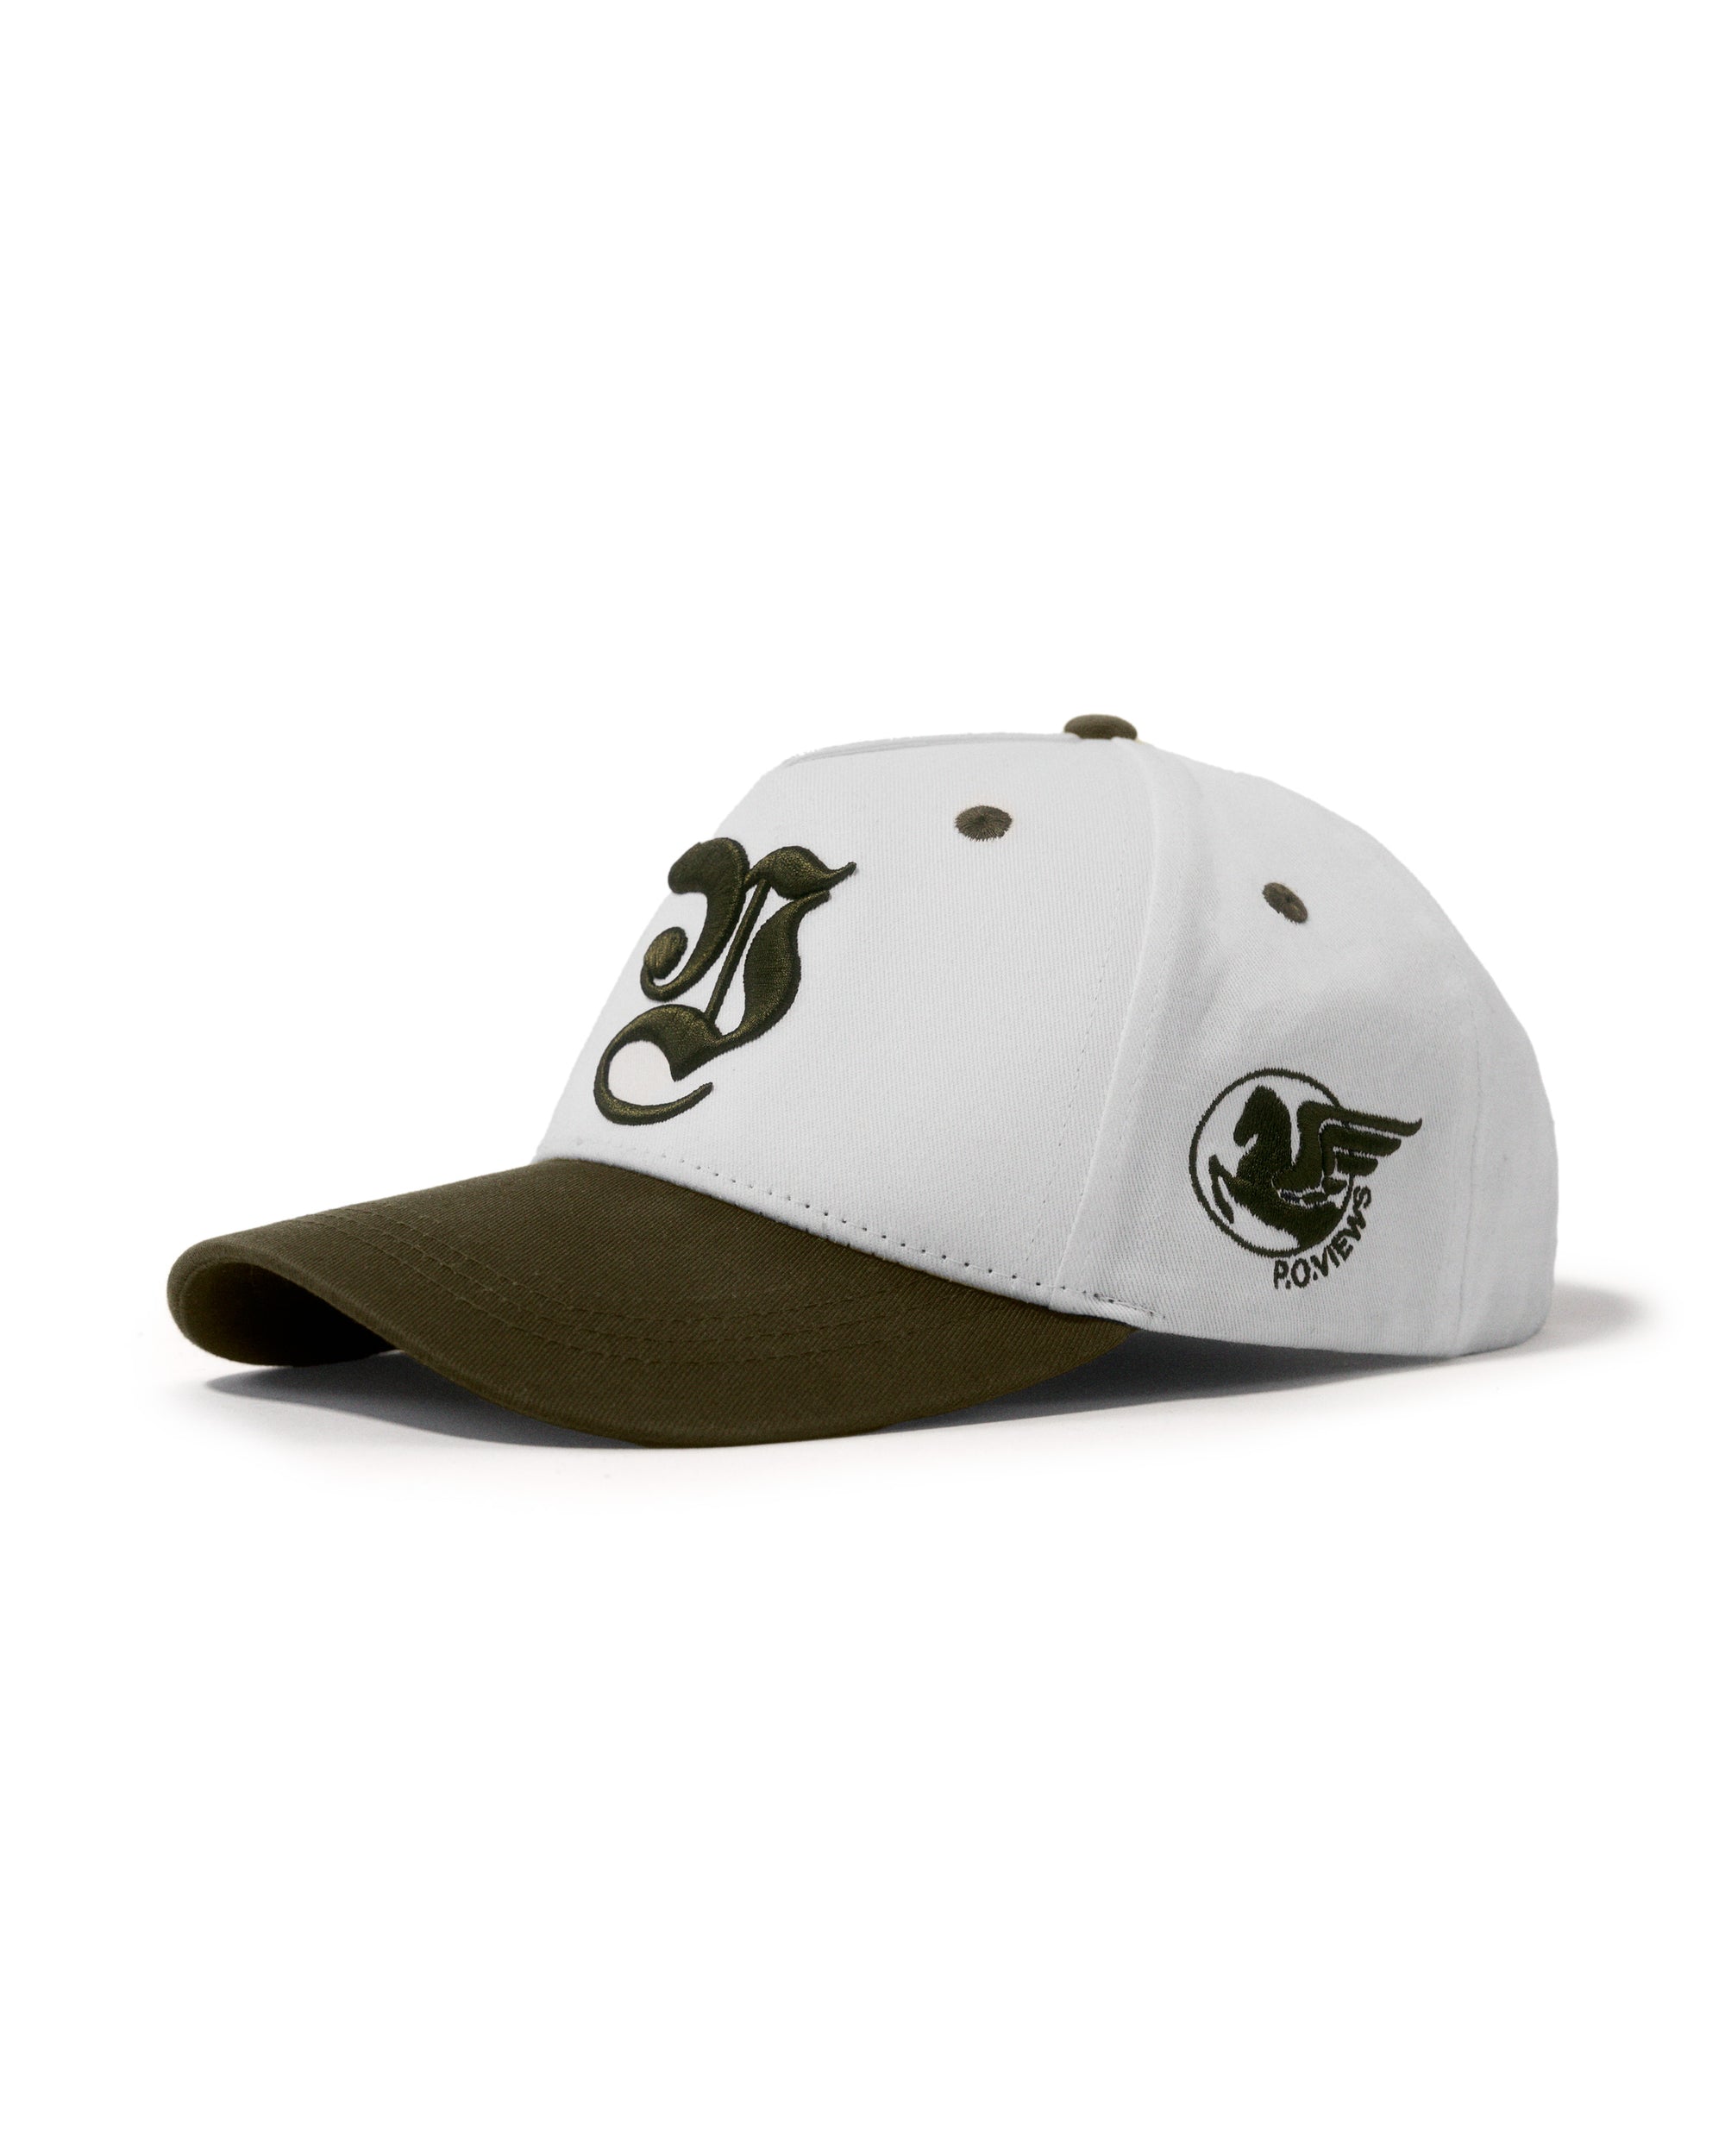 "Initiale" olive baseball cap